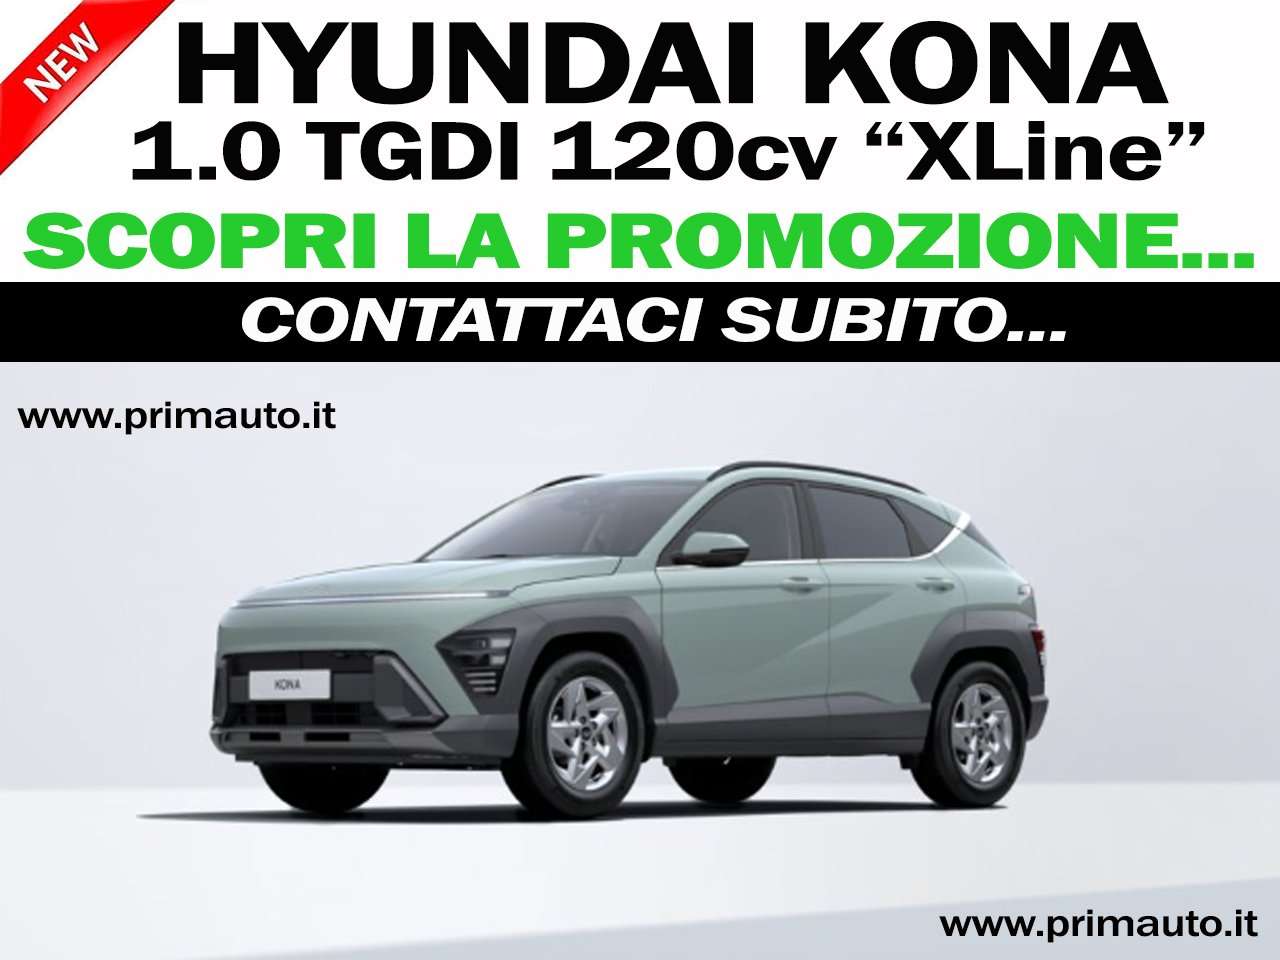 Hyundai KONA 1.0 t-gdi X-LINE 2wd 120cv - New Model!